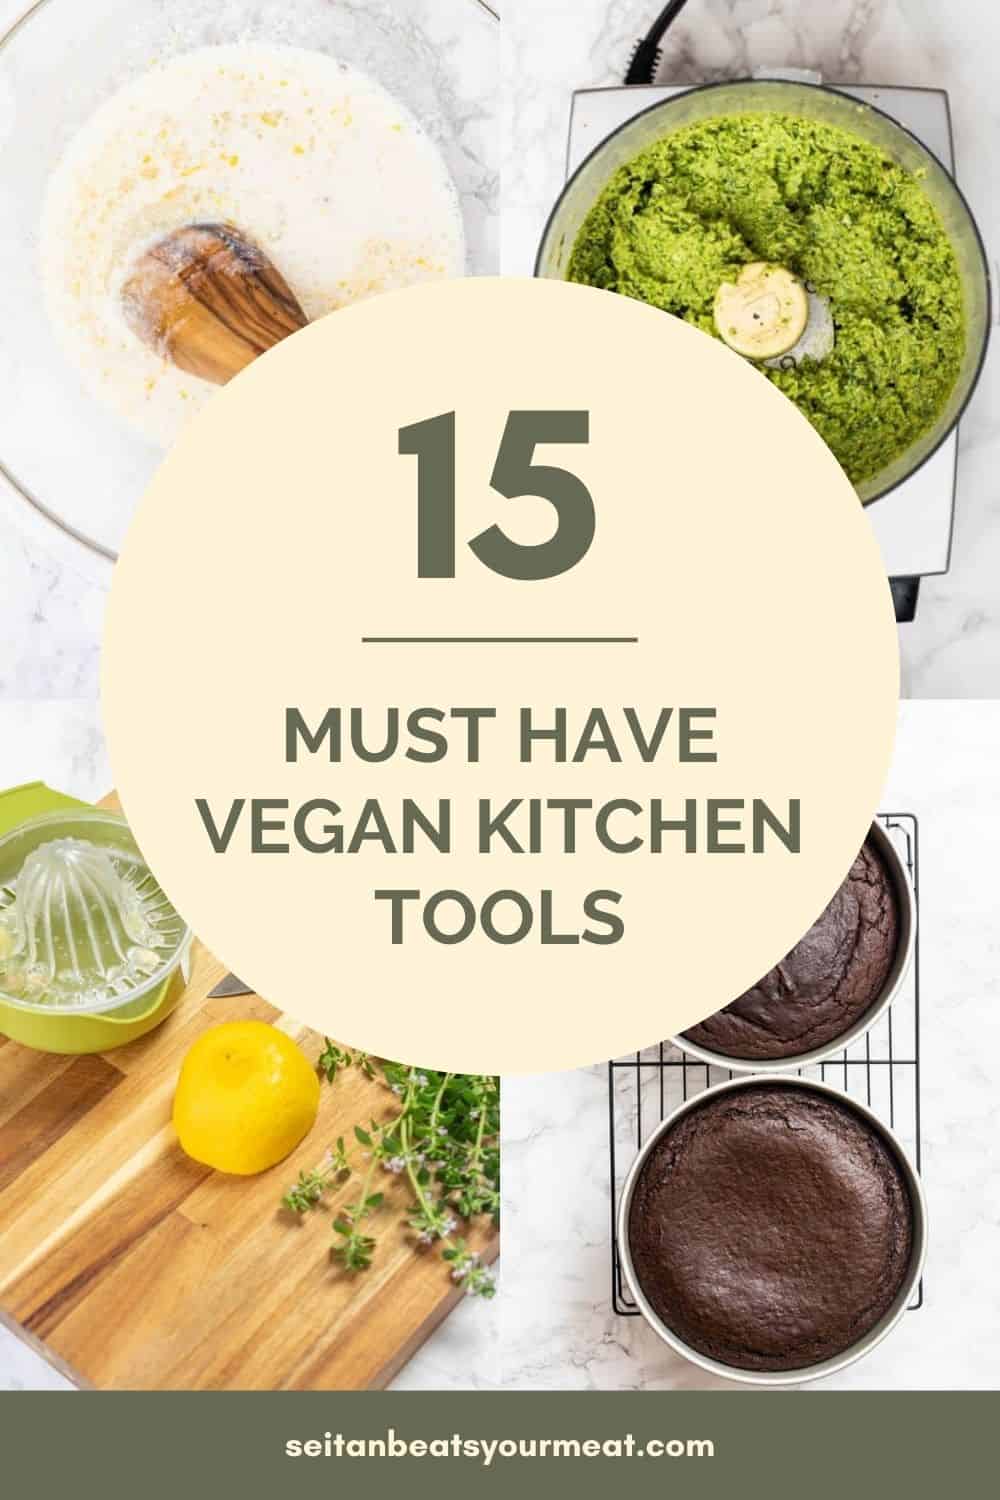 The Top 5 Kitchen Tools Every Vegan Needs (Vegan Kitchen Tools)